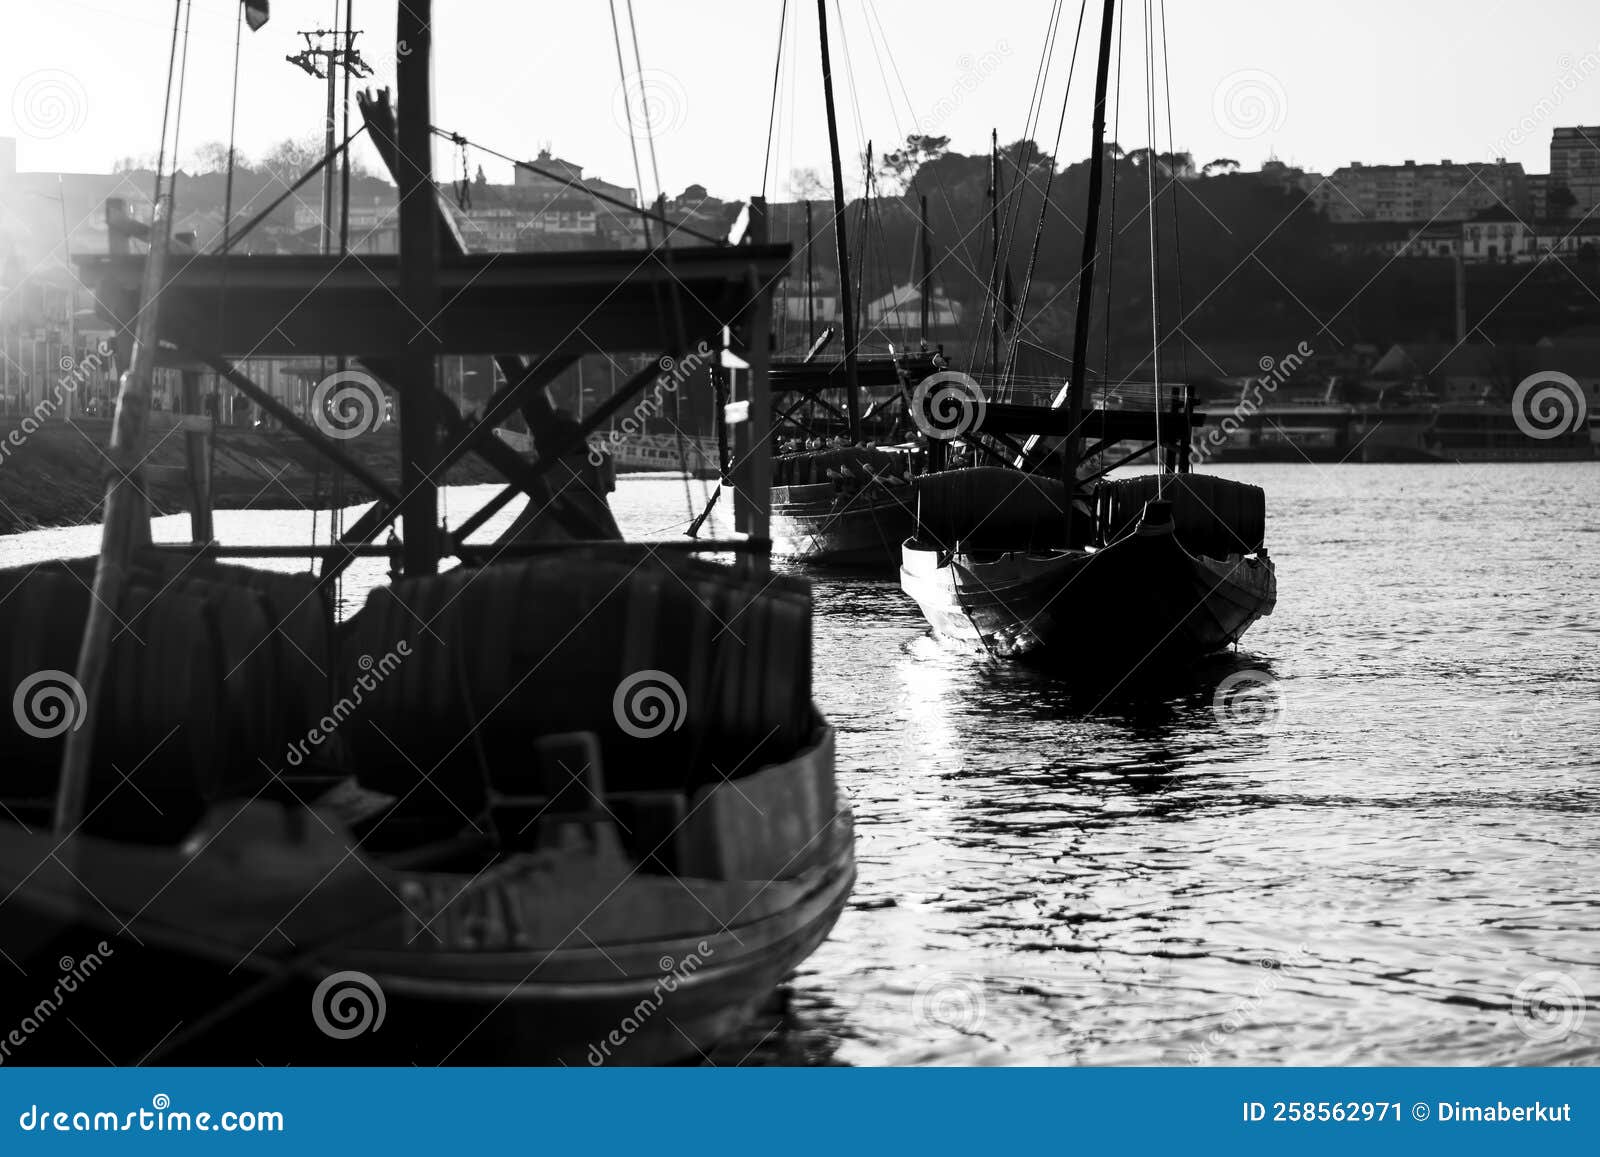 vintage traditional boats in vila nova de gaia, porto, portugal.